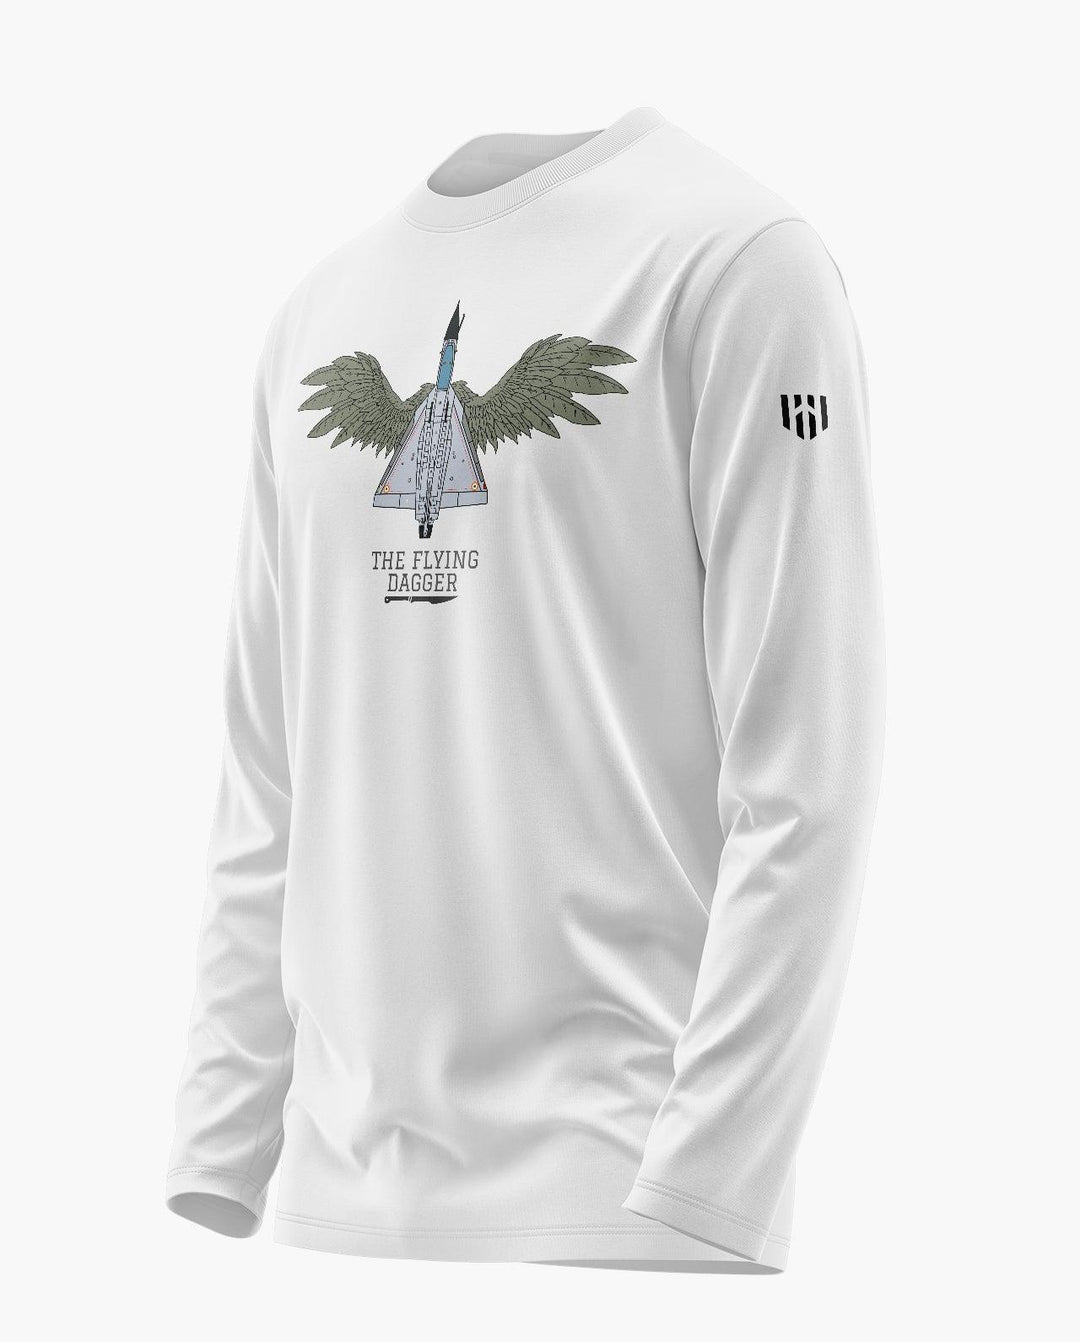 TEJAS- THE FLYING DAGGER Full Sleeve T-Shirt - Aero Armour